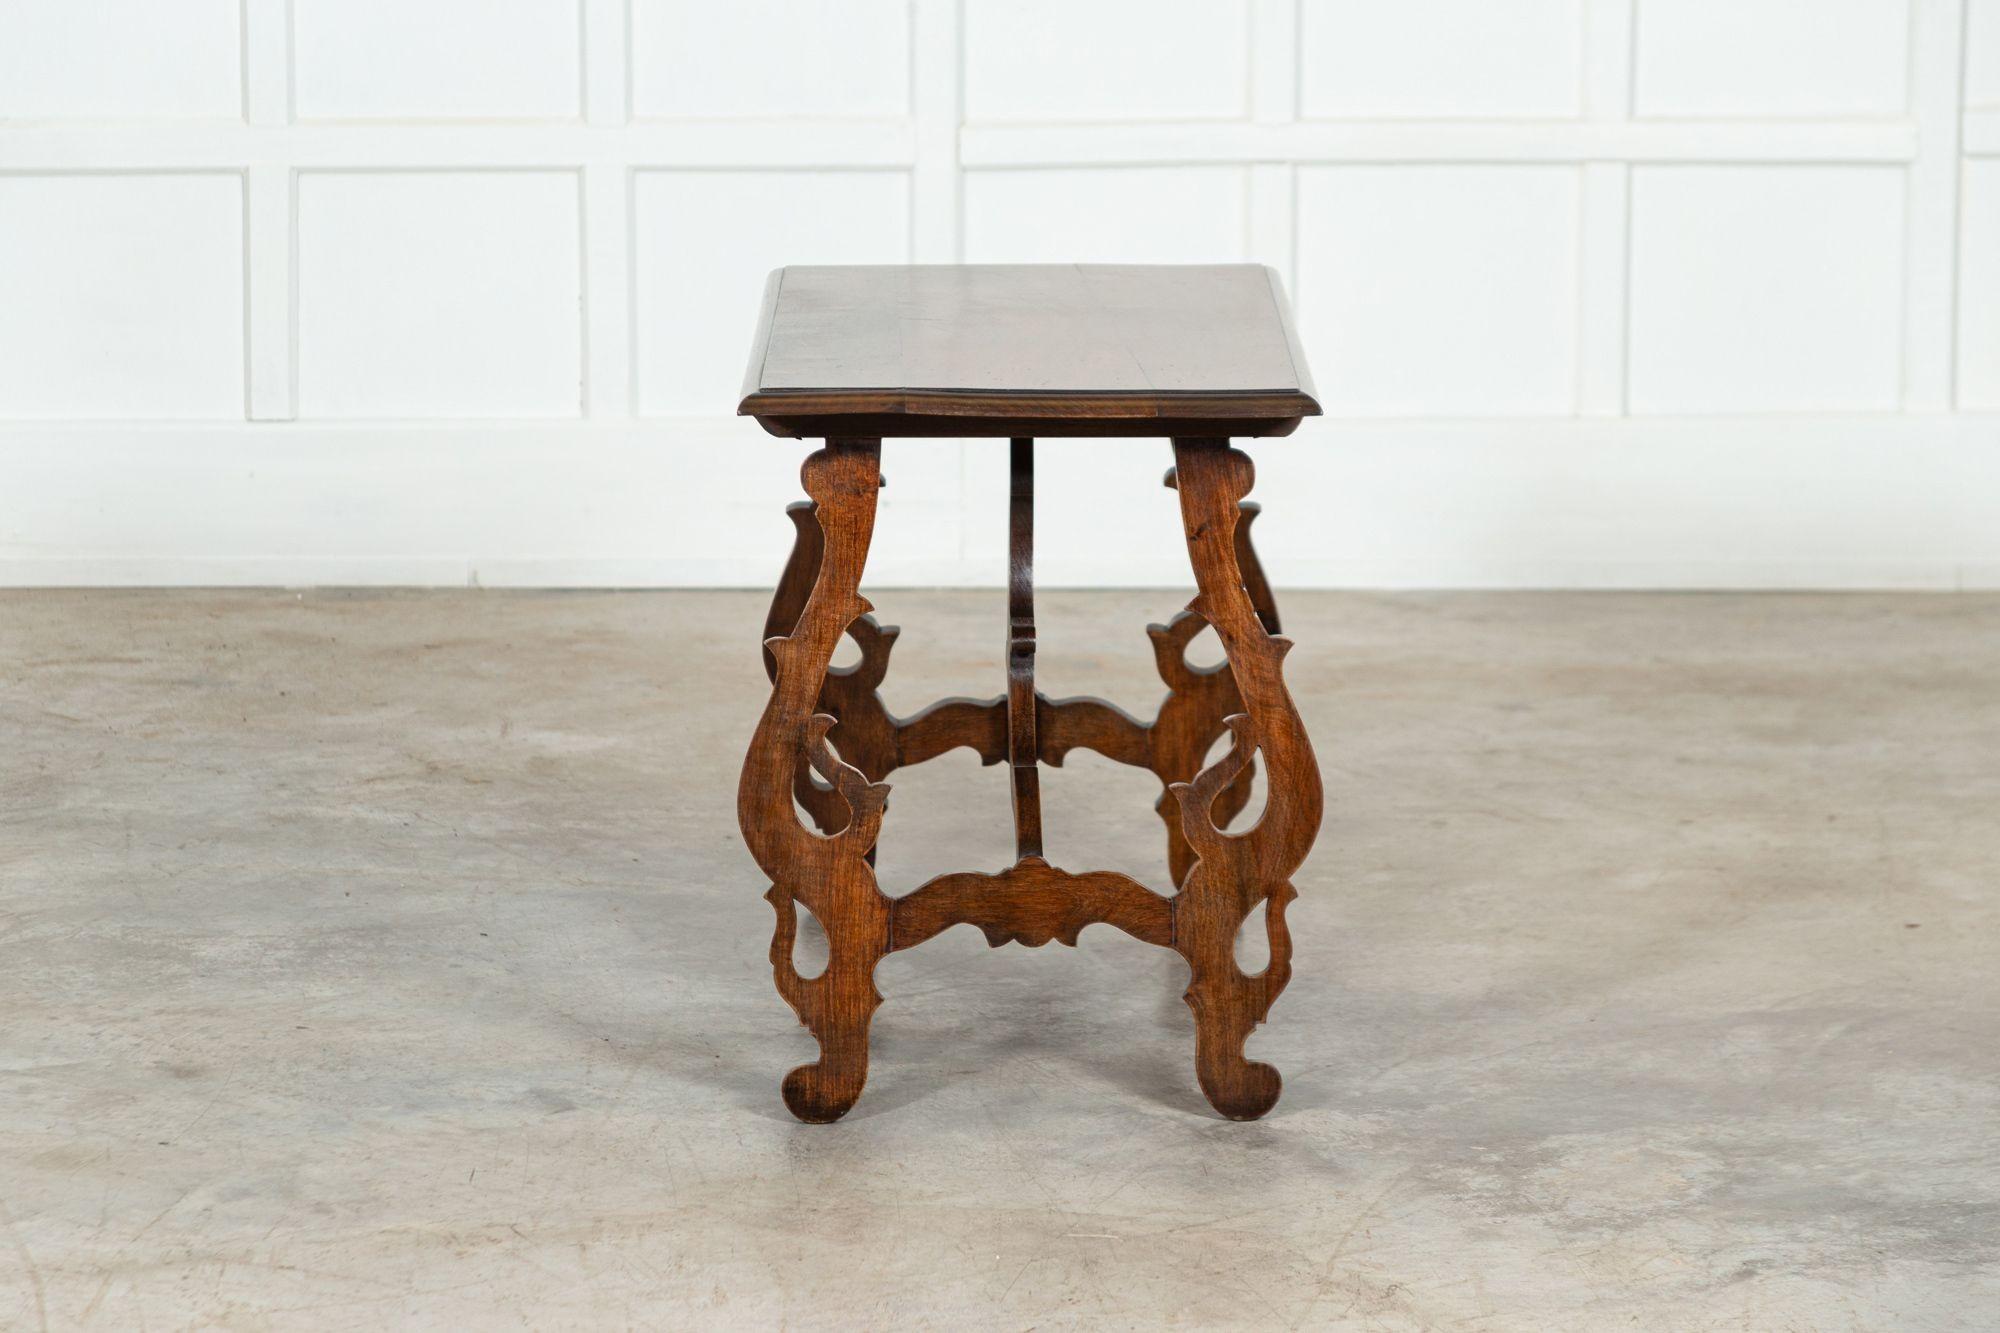 circa 1870
19th century Spanish Walnut Trestle Table
Provenance: Colefax & Fowler
sku 1446
W85 x D50 x H64 cm